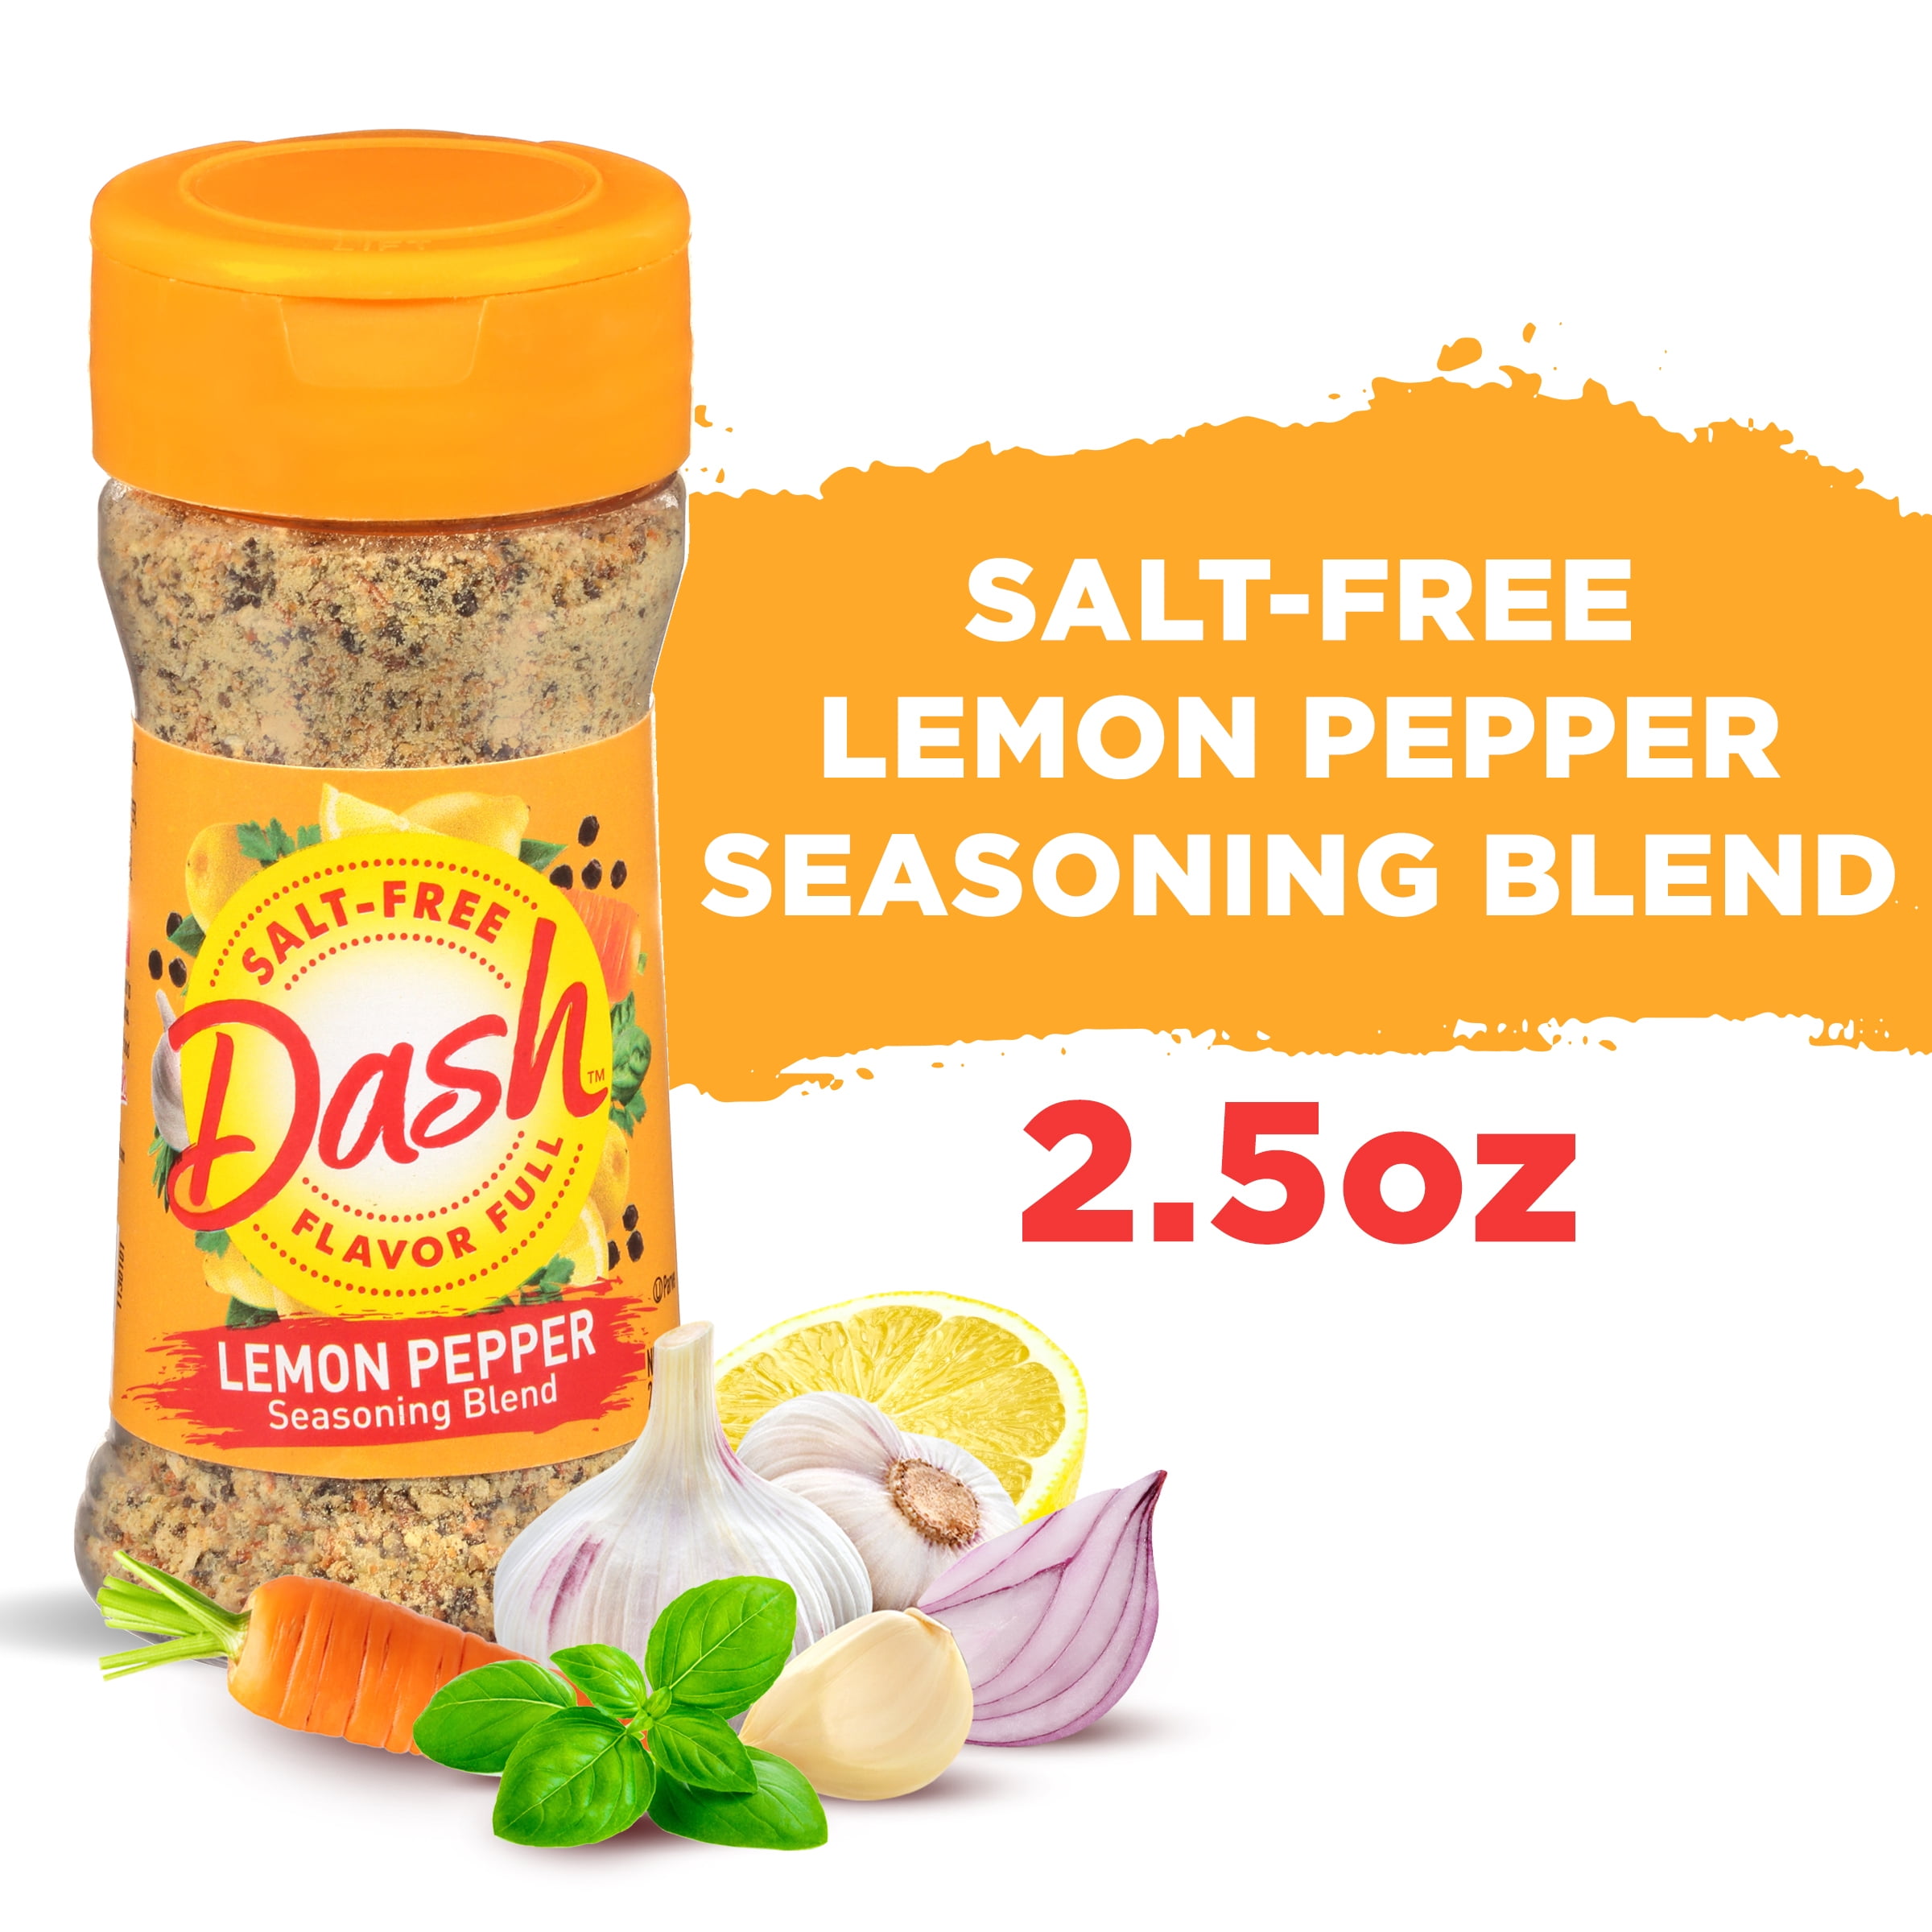 Dash Lemon Pepper Seasoning Blend, Salt-Free, Kosher, 2.5 oz